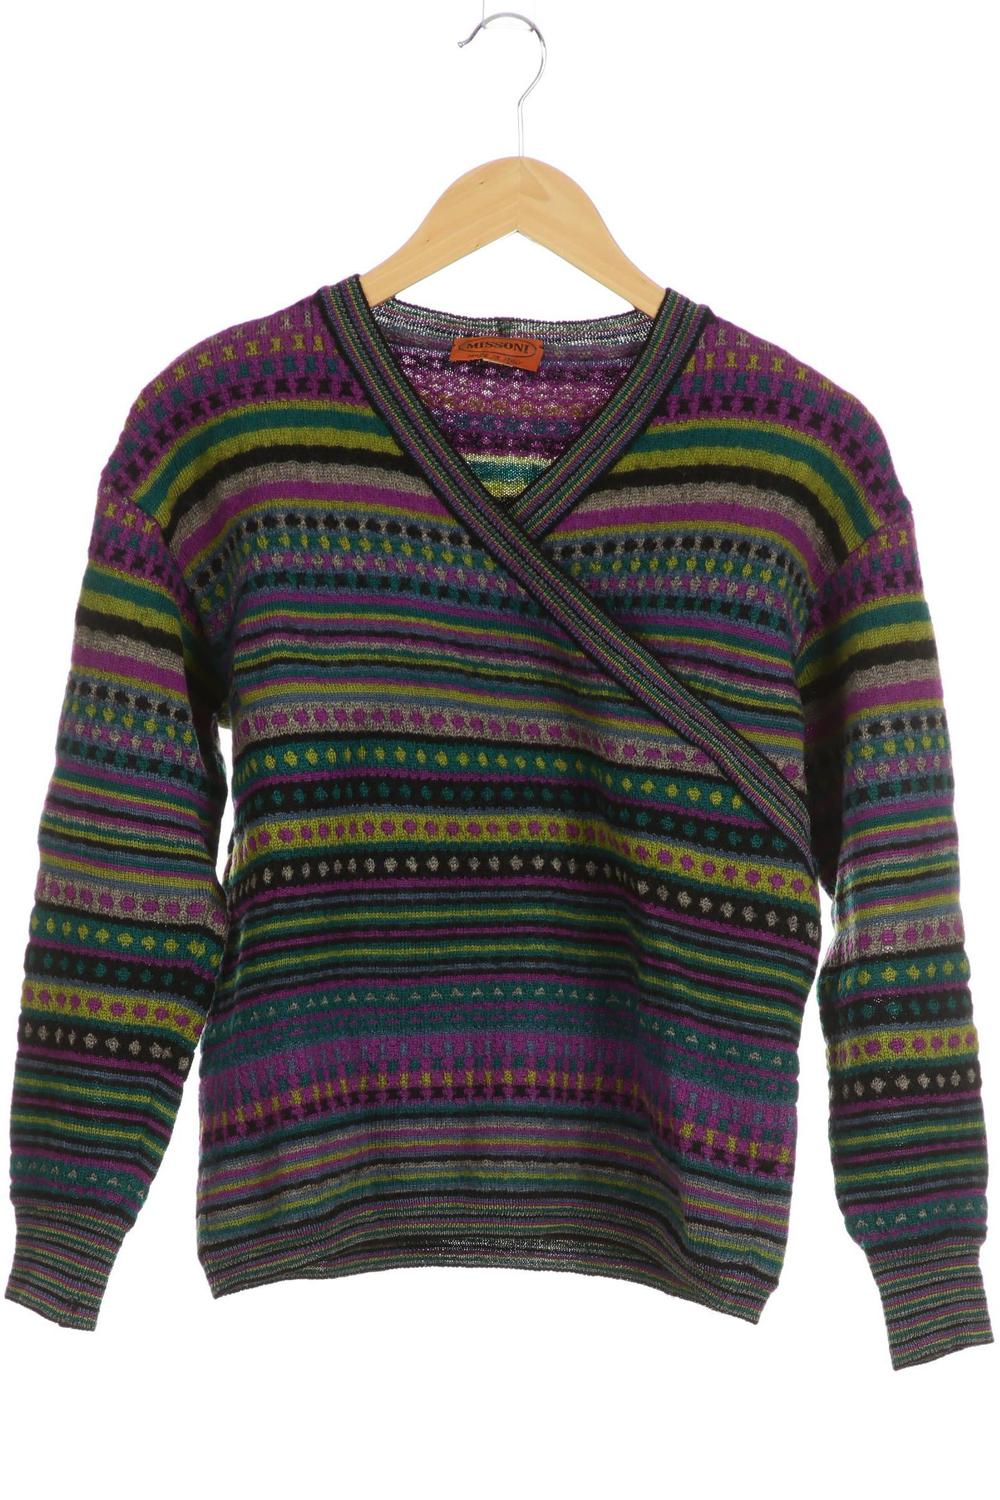 Missoni Pullover Damen Hoodie Sweatshirt Gr. M Wolle lila #eec9bb7 | eBay